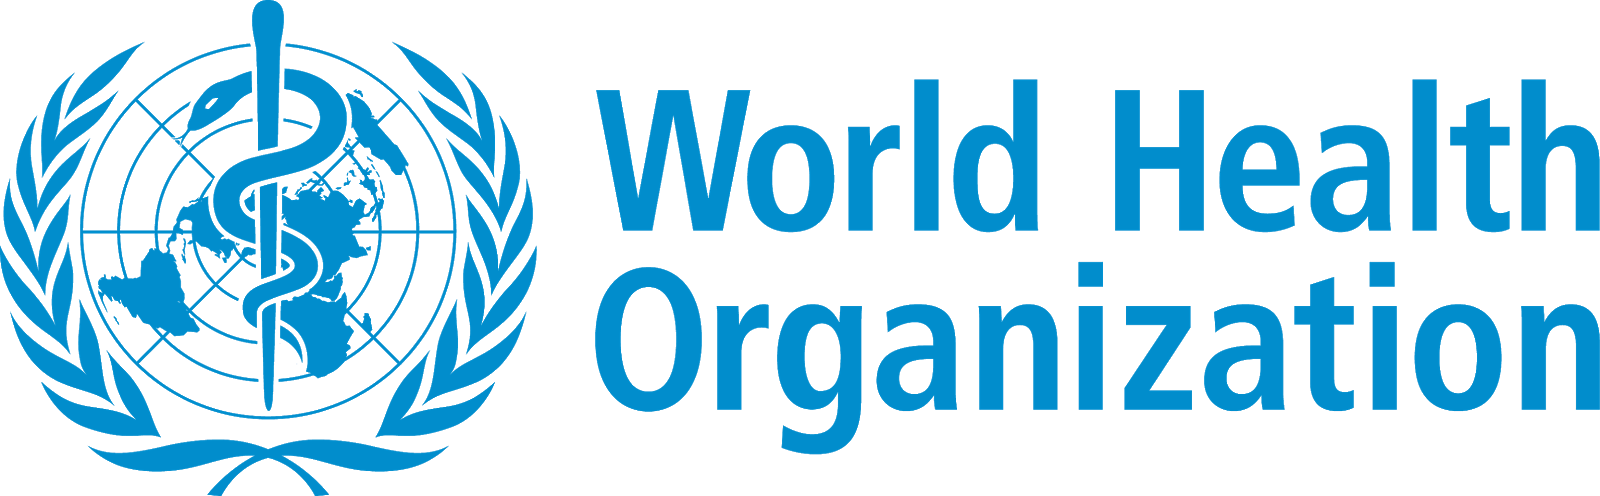 World Health Organization Recruitment 2020